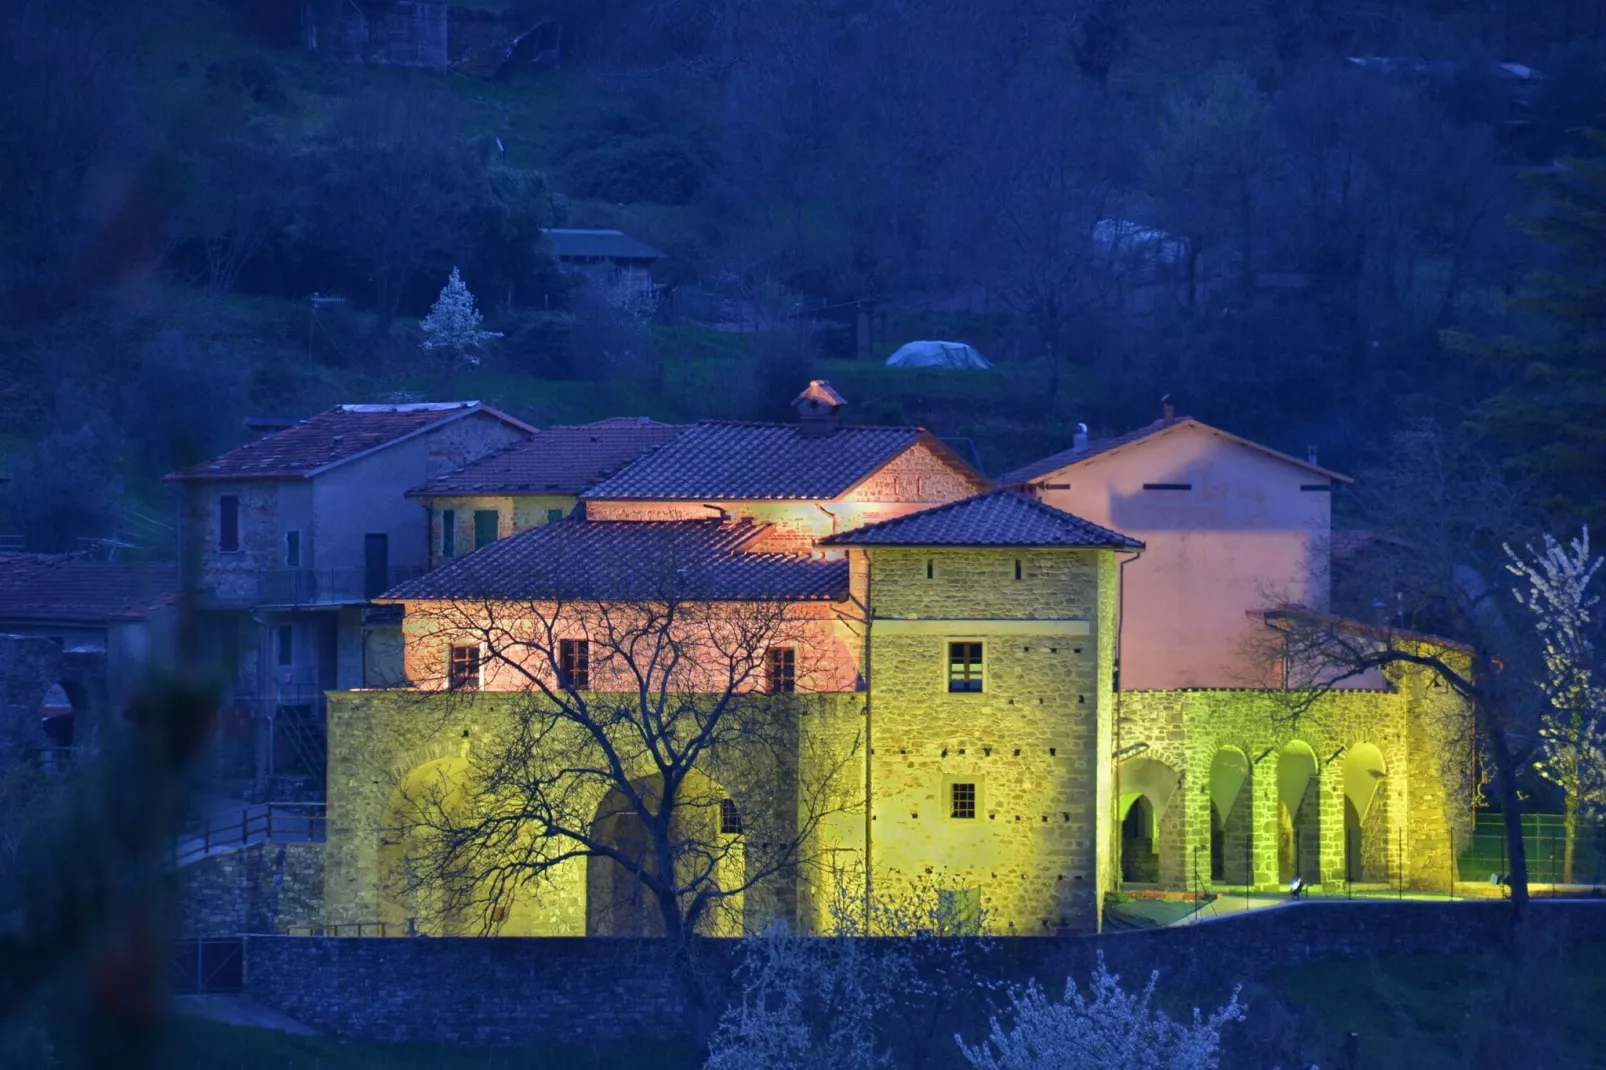 Castello di Argigliano 2-Niet-getagd